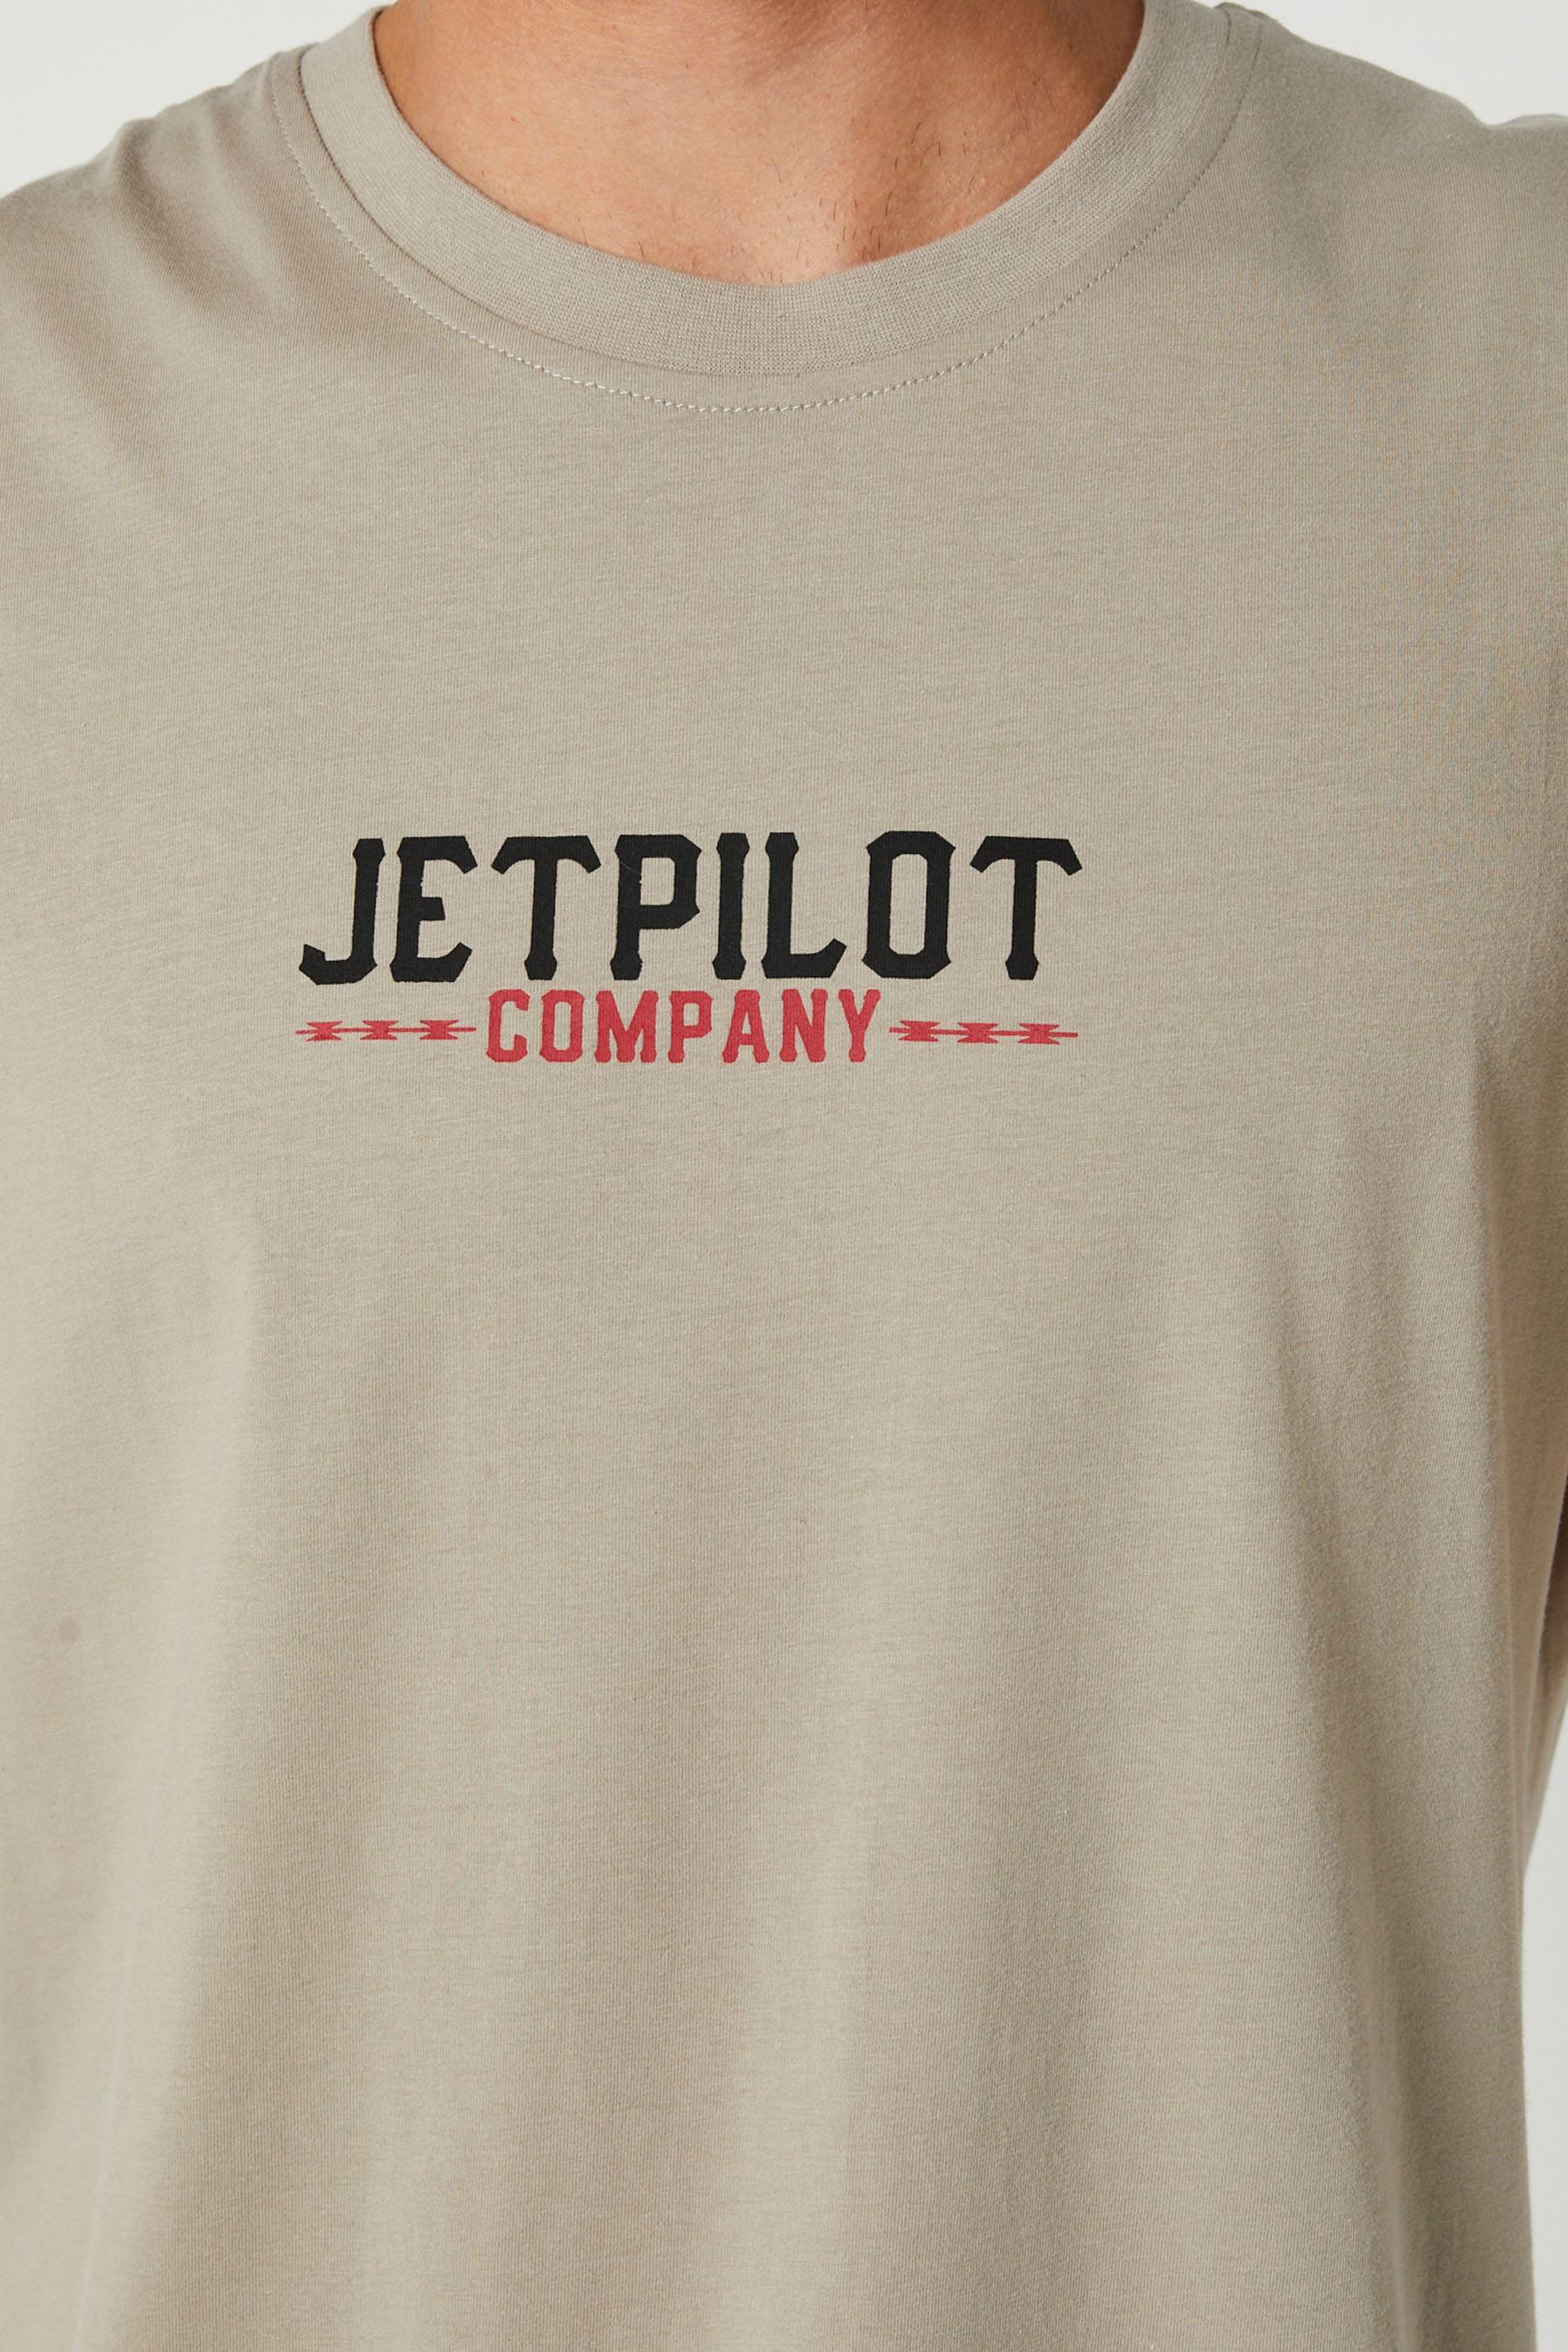 Jetpilot Hardcore Mens Muscle T-Shirt Warm Grey 2